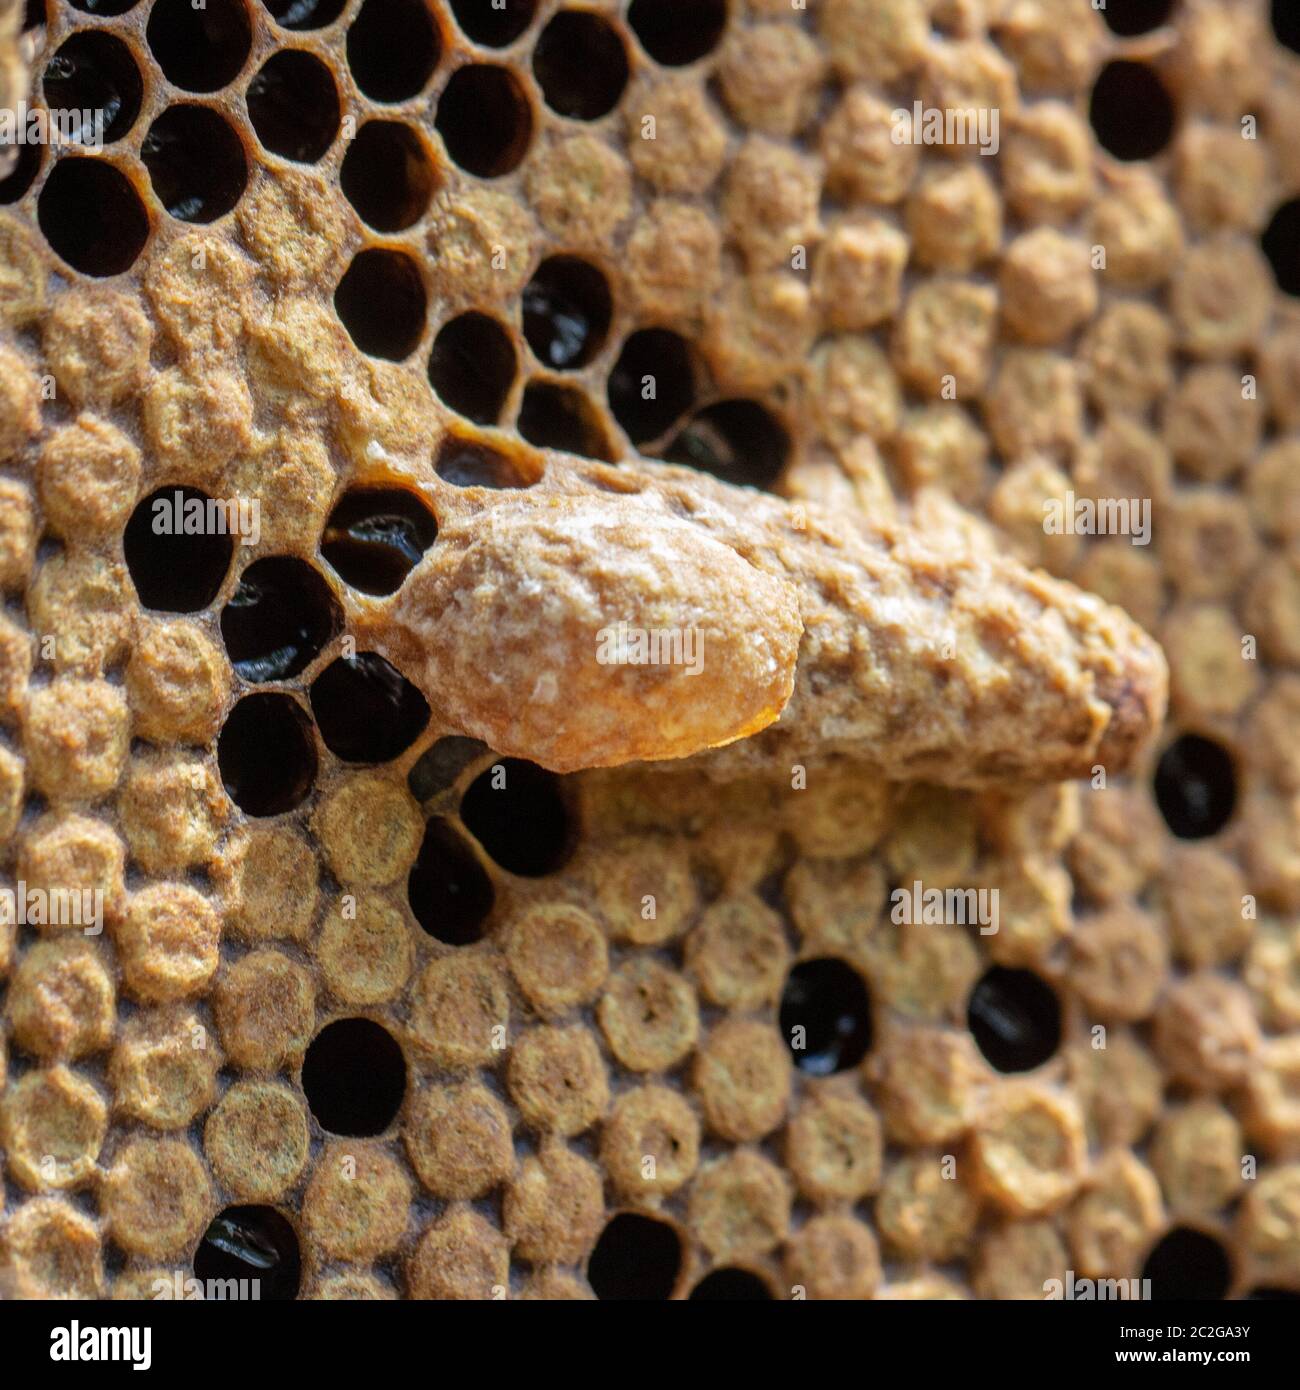 Queen's Nest in a beehive. Mother liquor Stock Photo